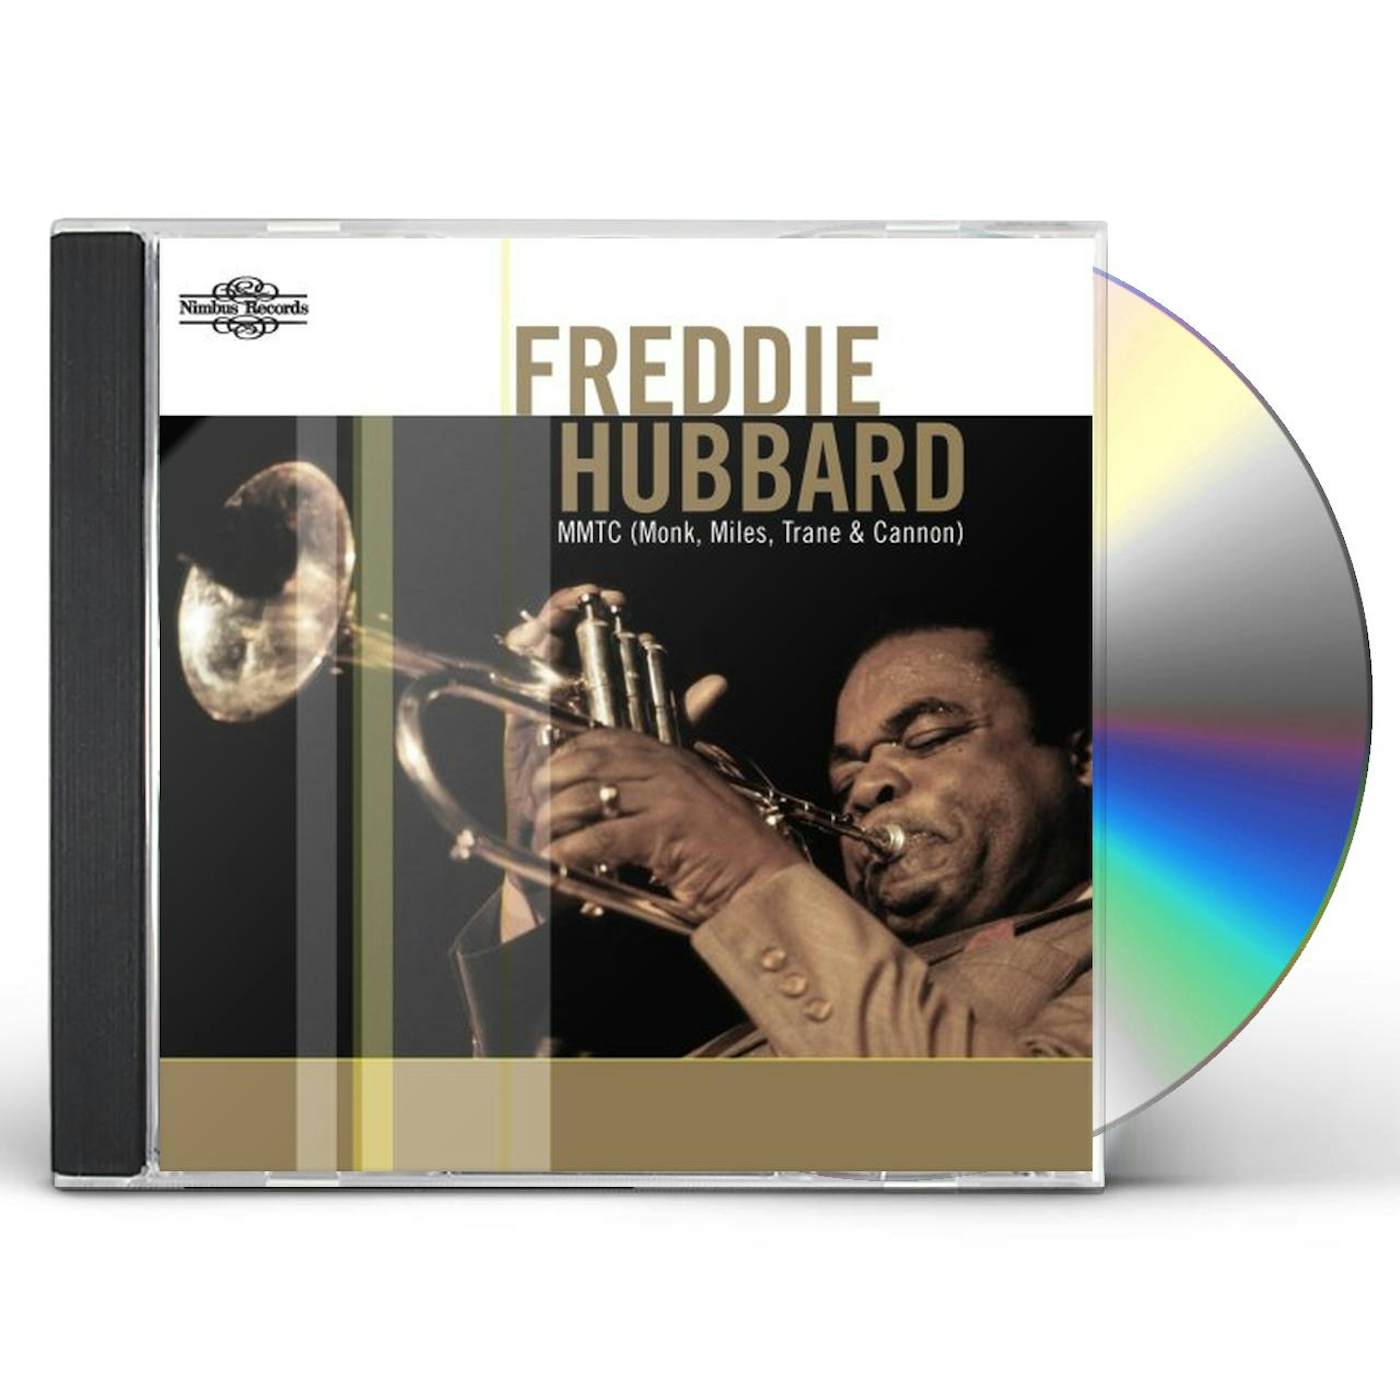 Freddie Hubbard MMTC (MONK/MILES/TRANCE & CANNON) CD